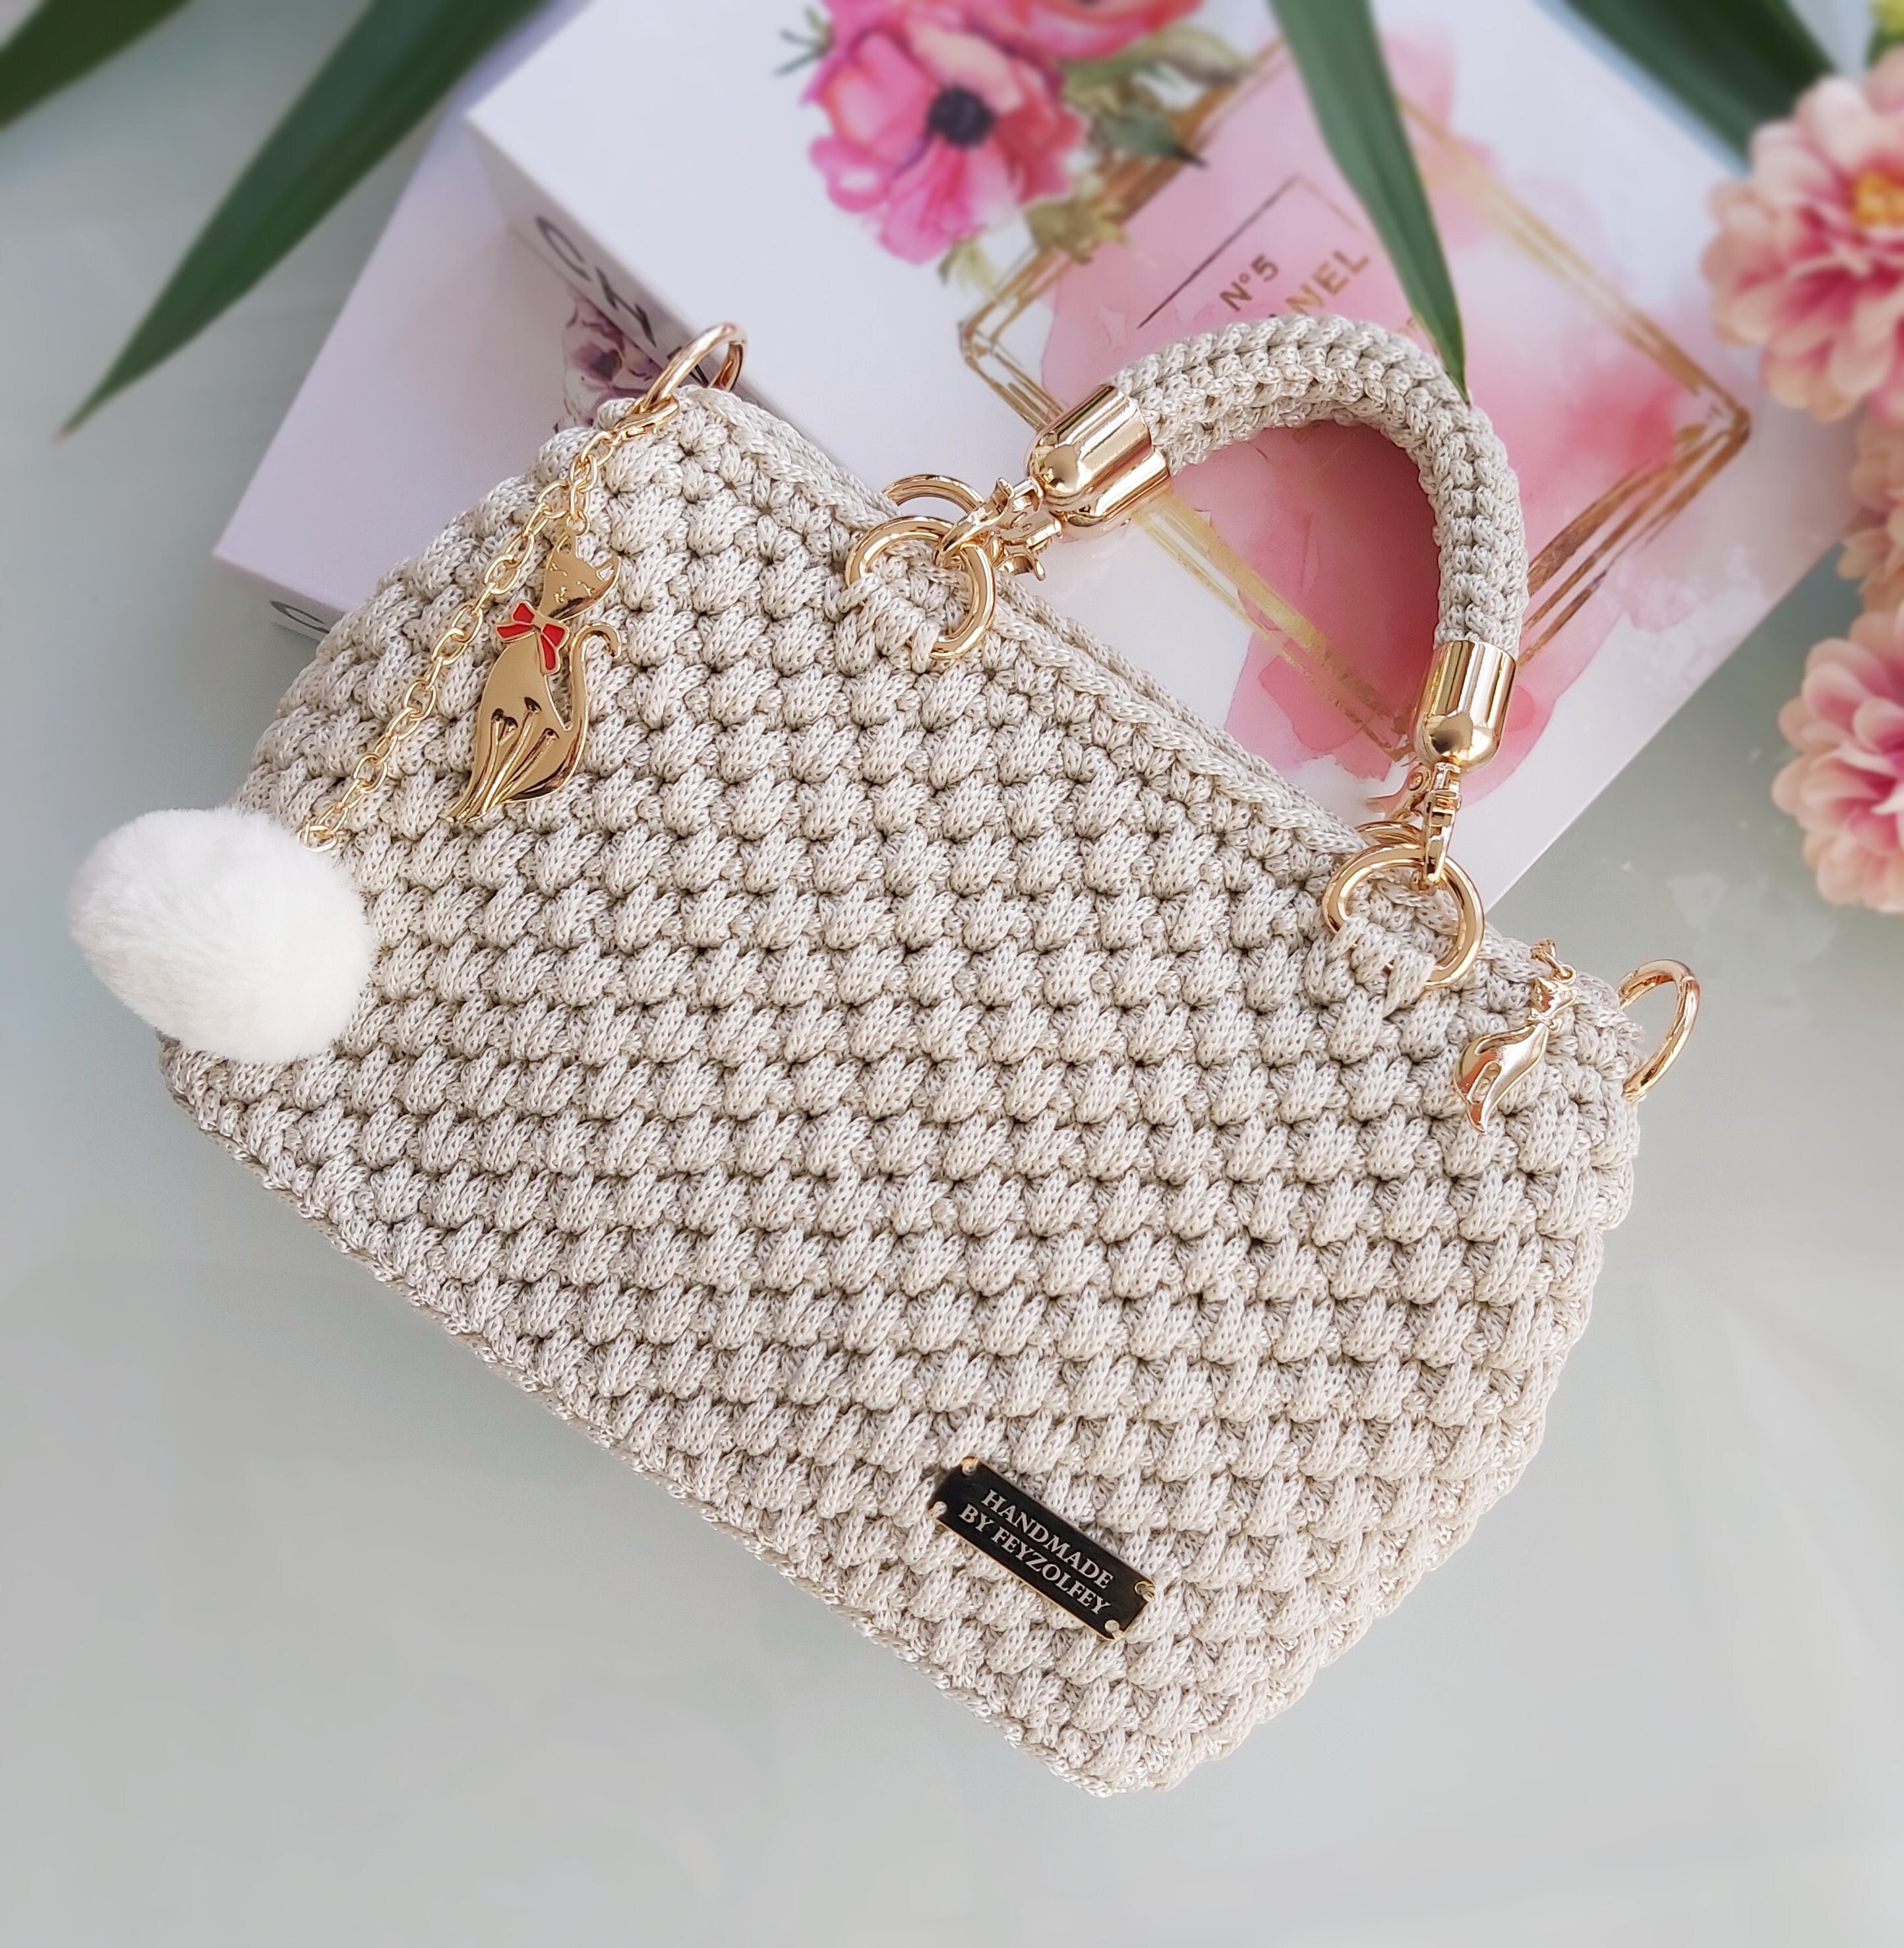 New Model Beads Handbag [purse] Making Tutorial for Beginners - YouTube